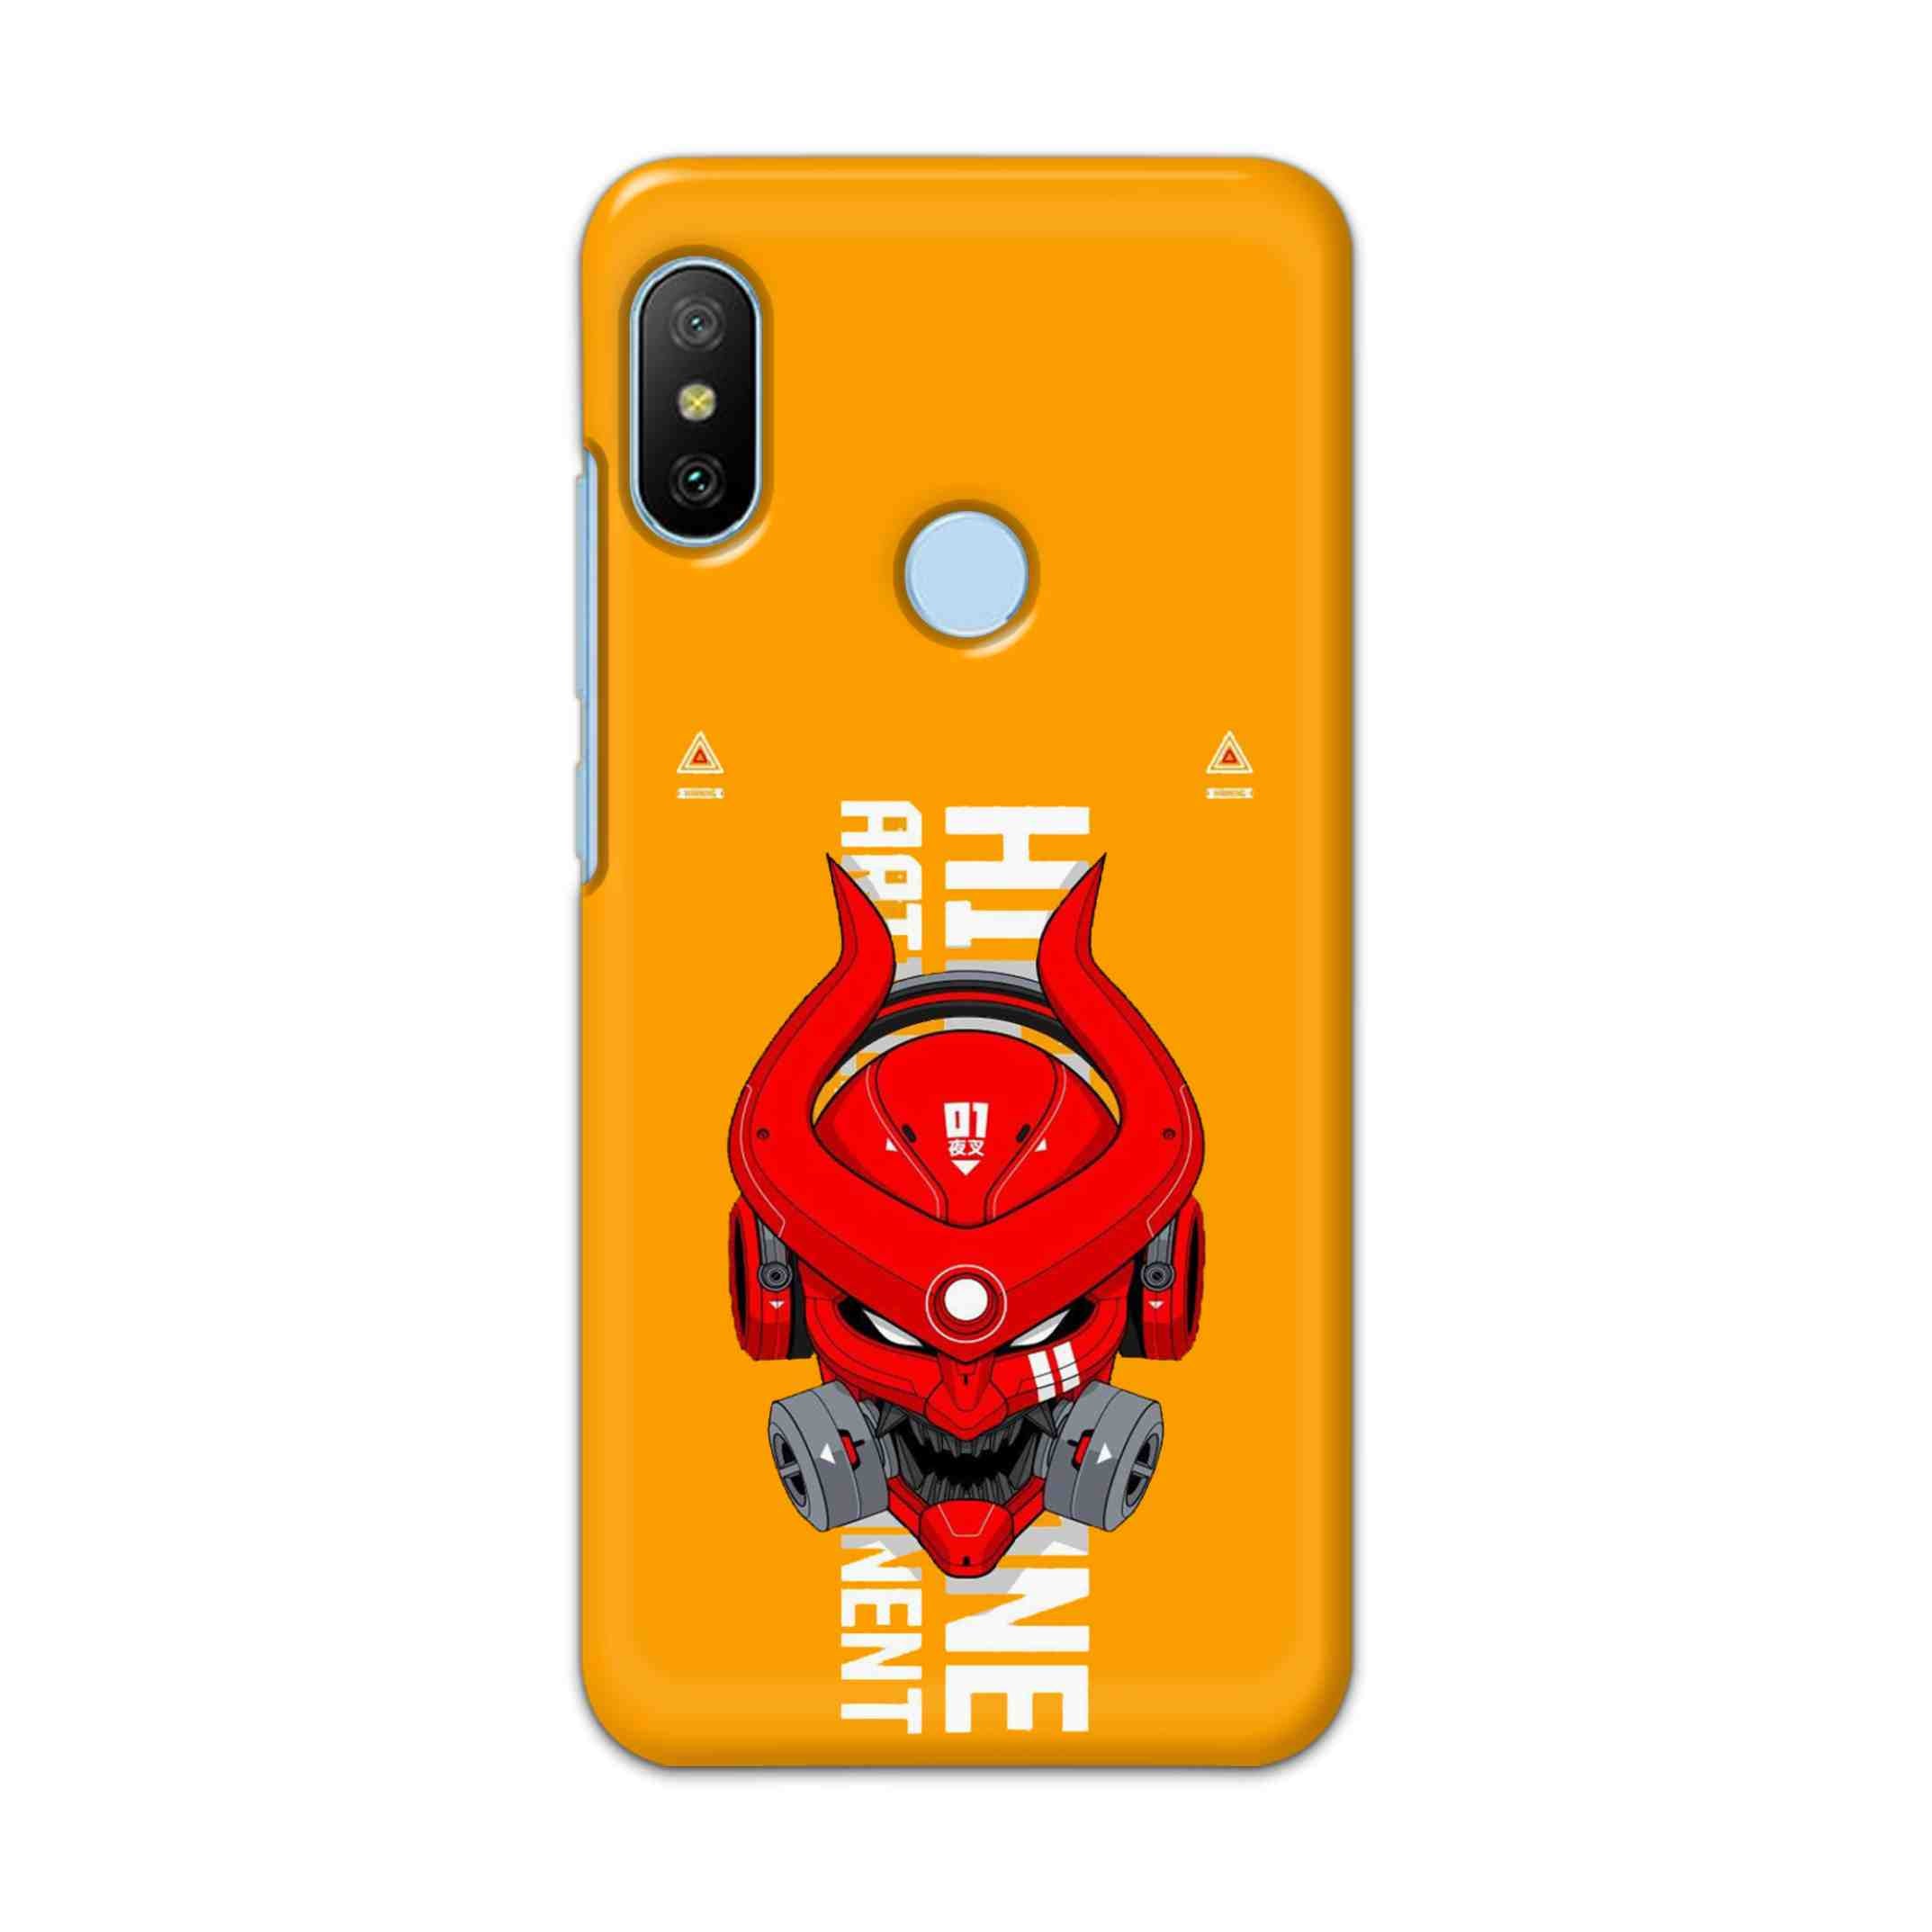 Buy Bull Skull Hard Back Mobile Phone Case/Cover For Xiaomi Redmi 6 Pro Online